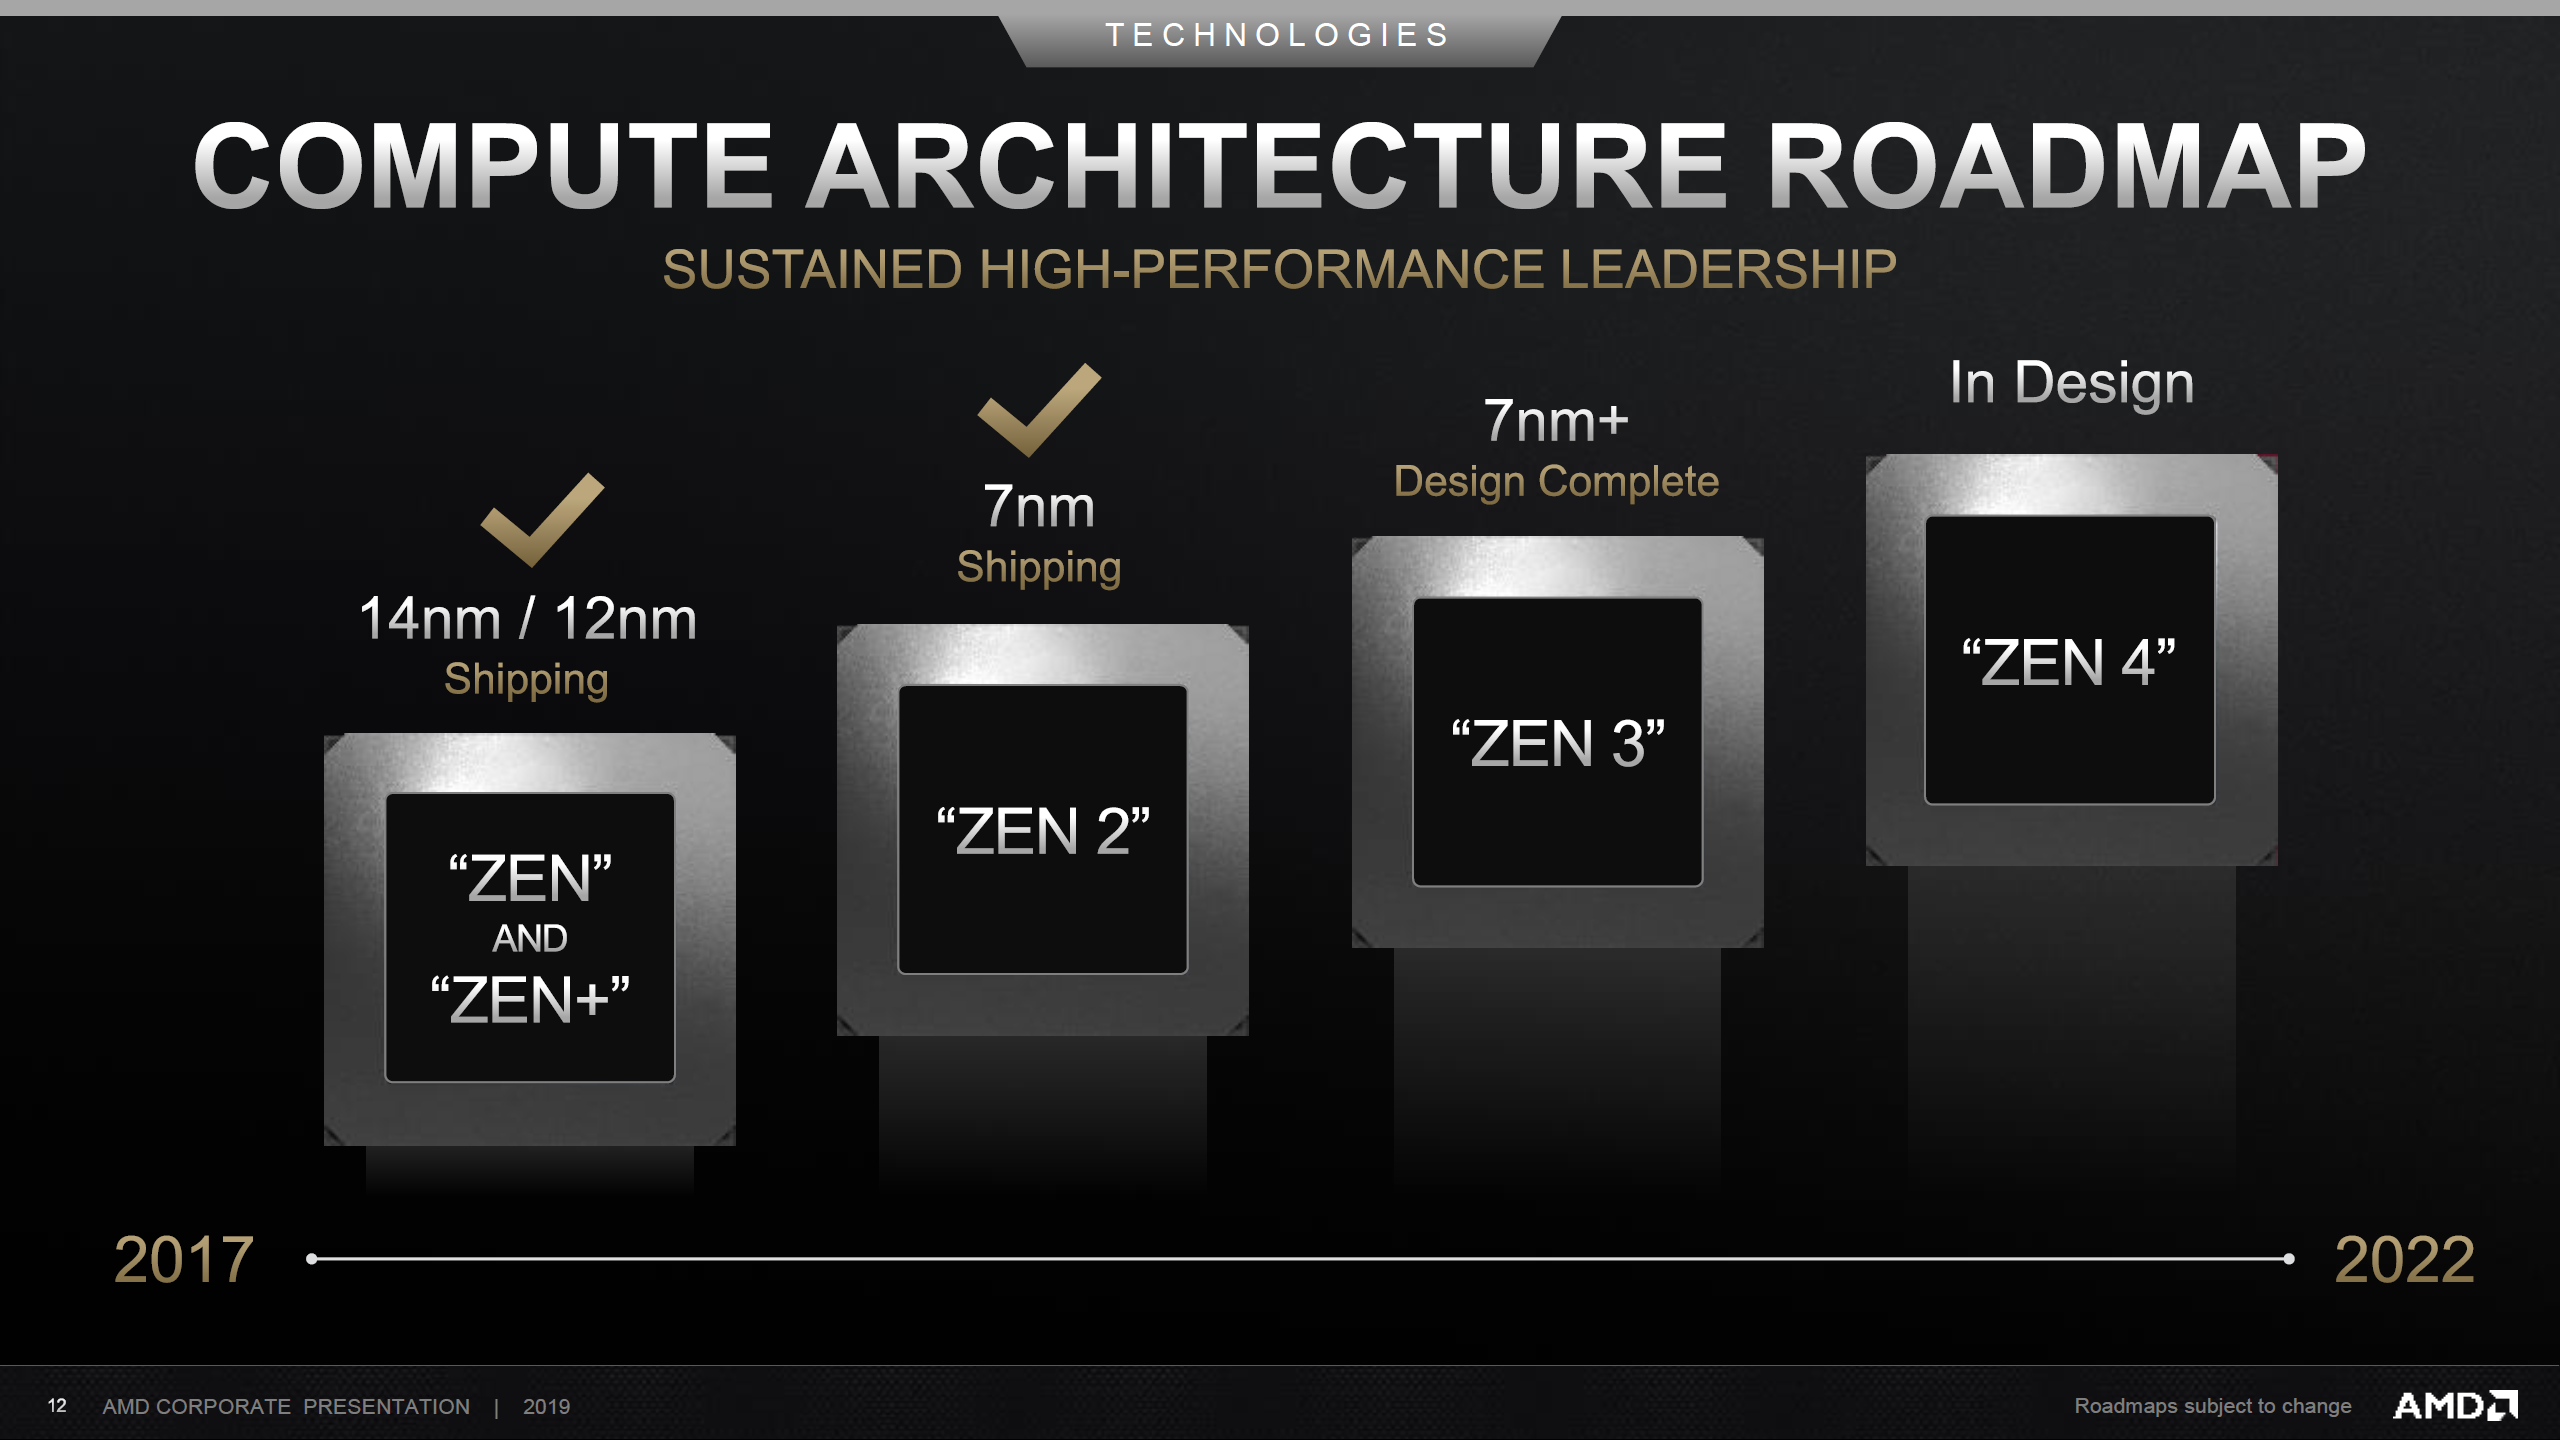 Cuidado Intel! A AMD vai revelar a nova arquitetura Zen 3 na CES 2020